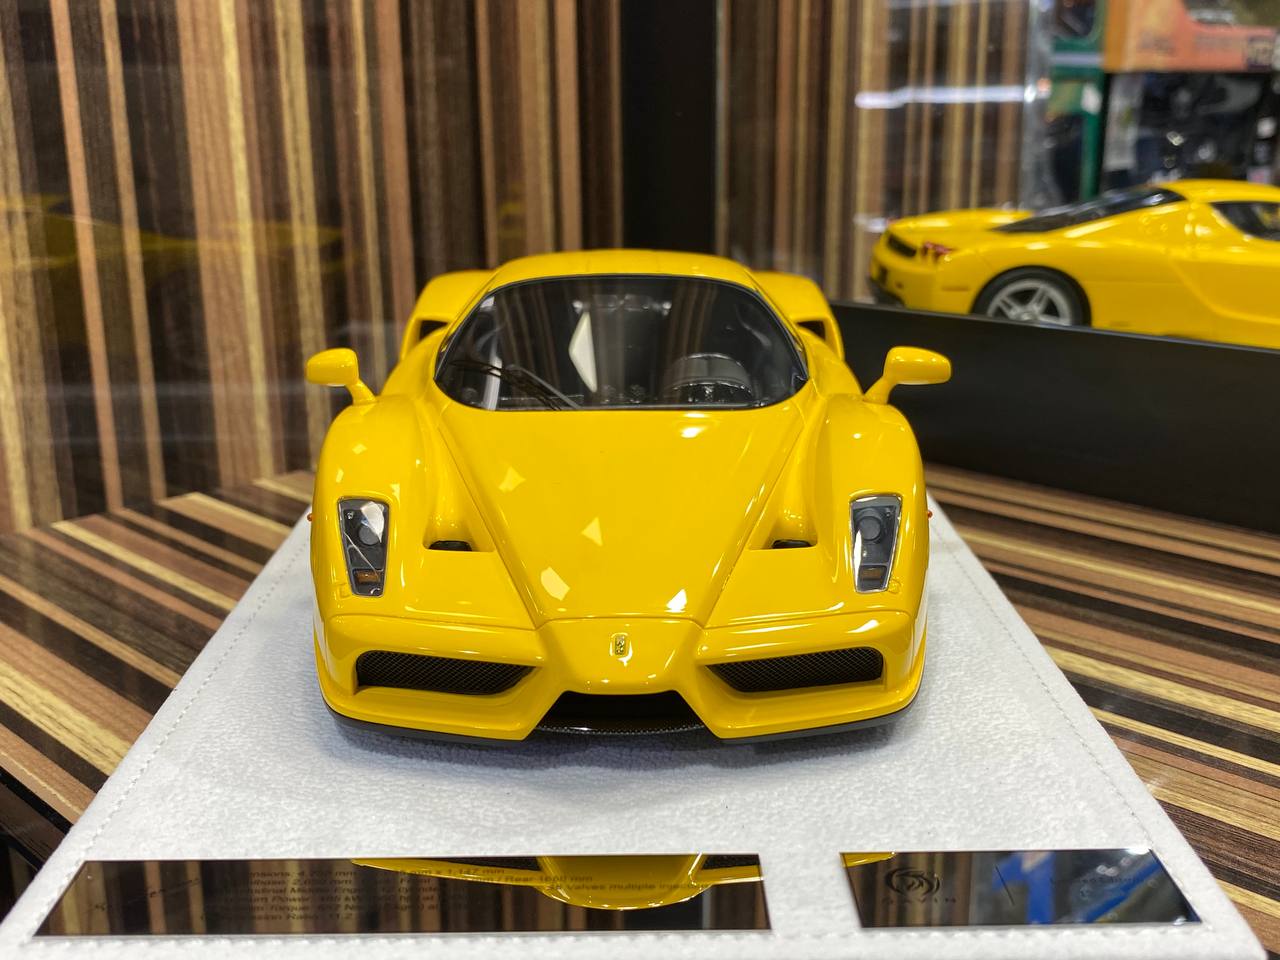 GAVIN Models Ferrari Enzo - Yellow (1/18 Resin Model) Miniature Car|Sold in Dturman.com Dubai UAE.